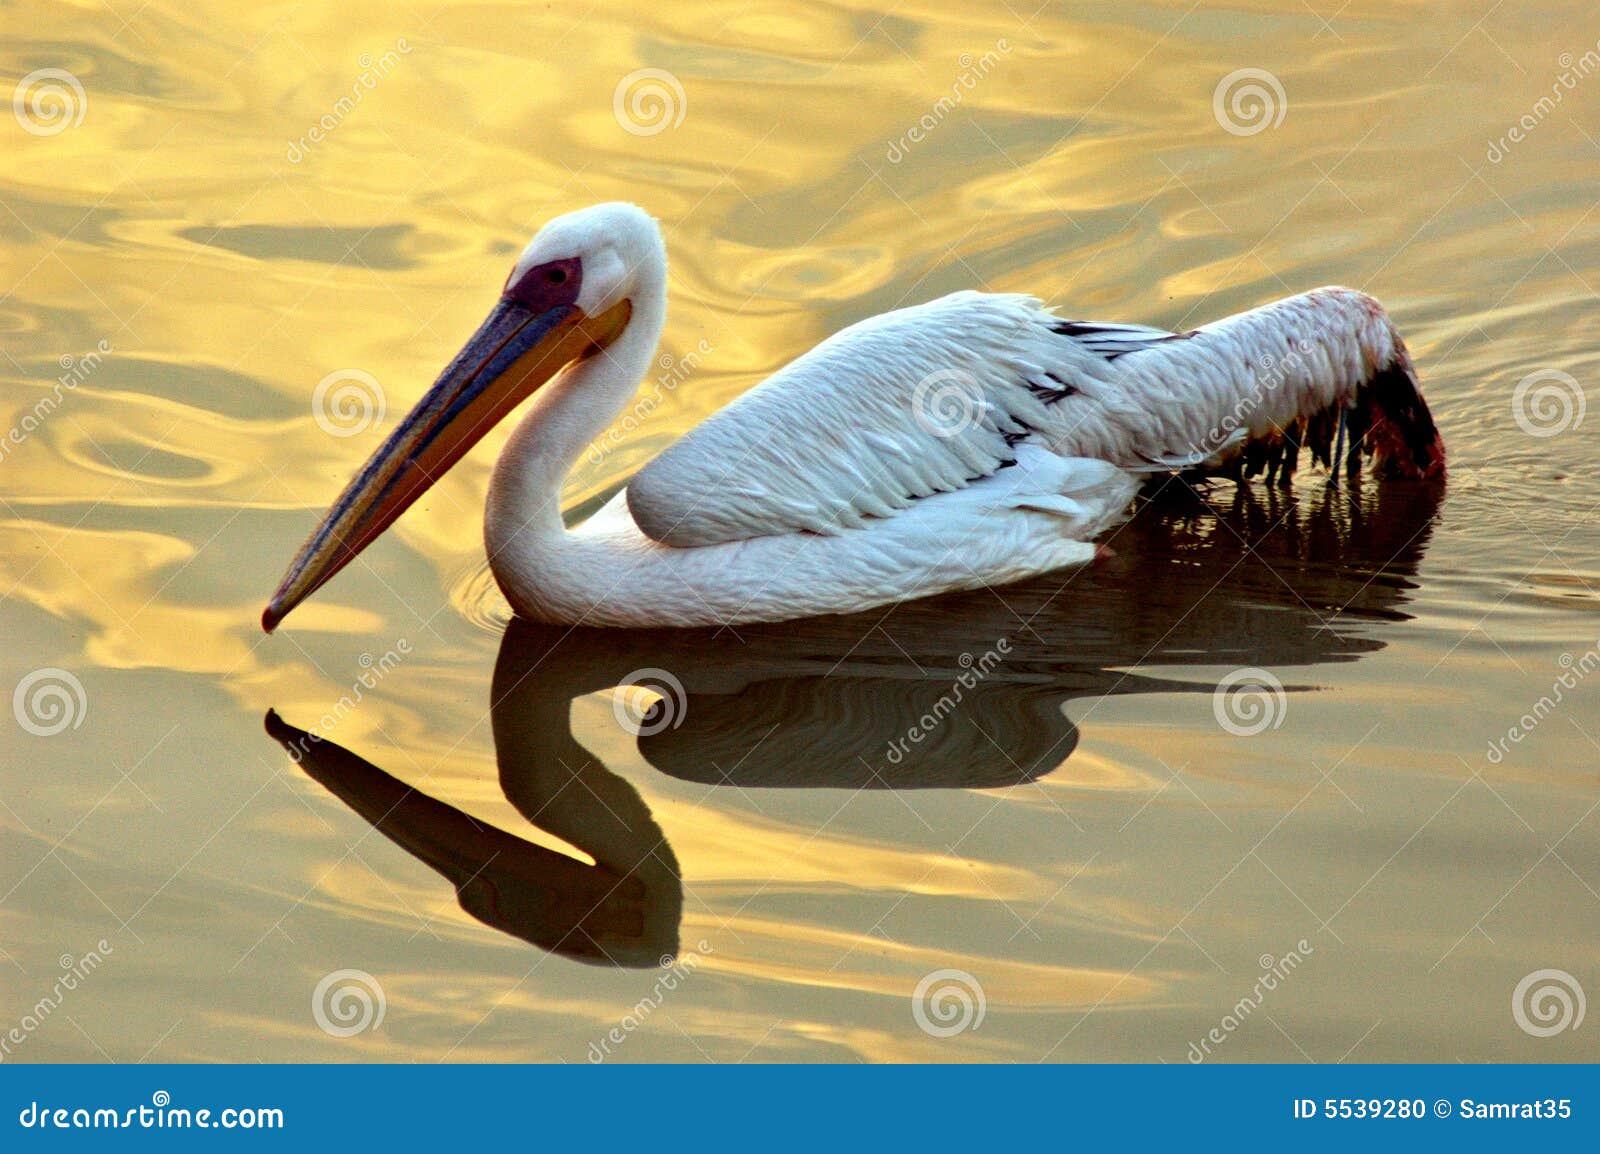 migratory bird on the lake water.